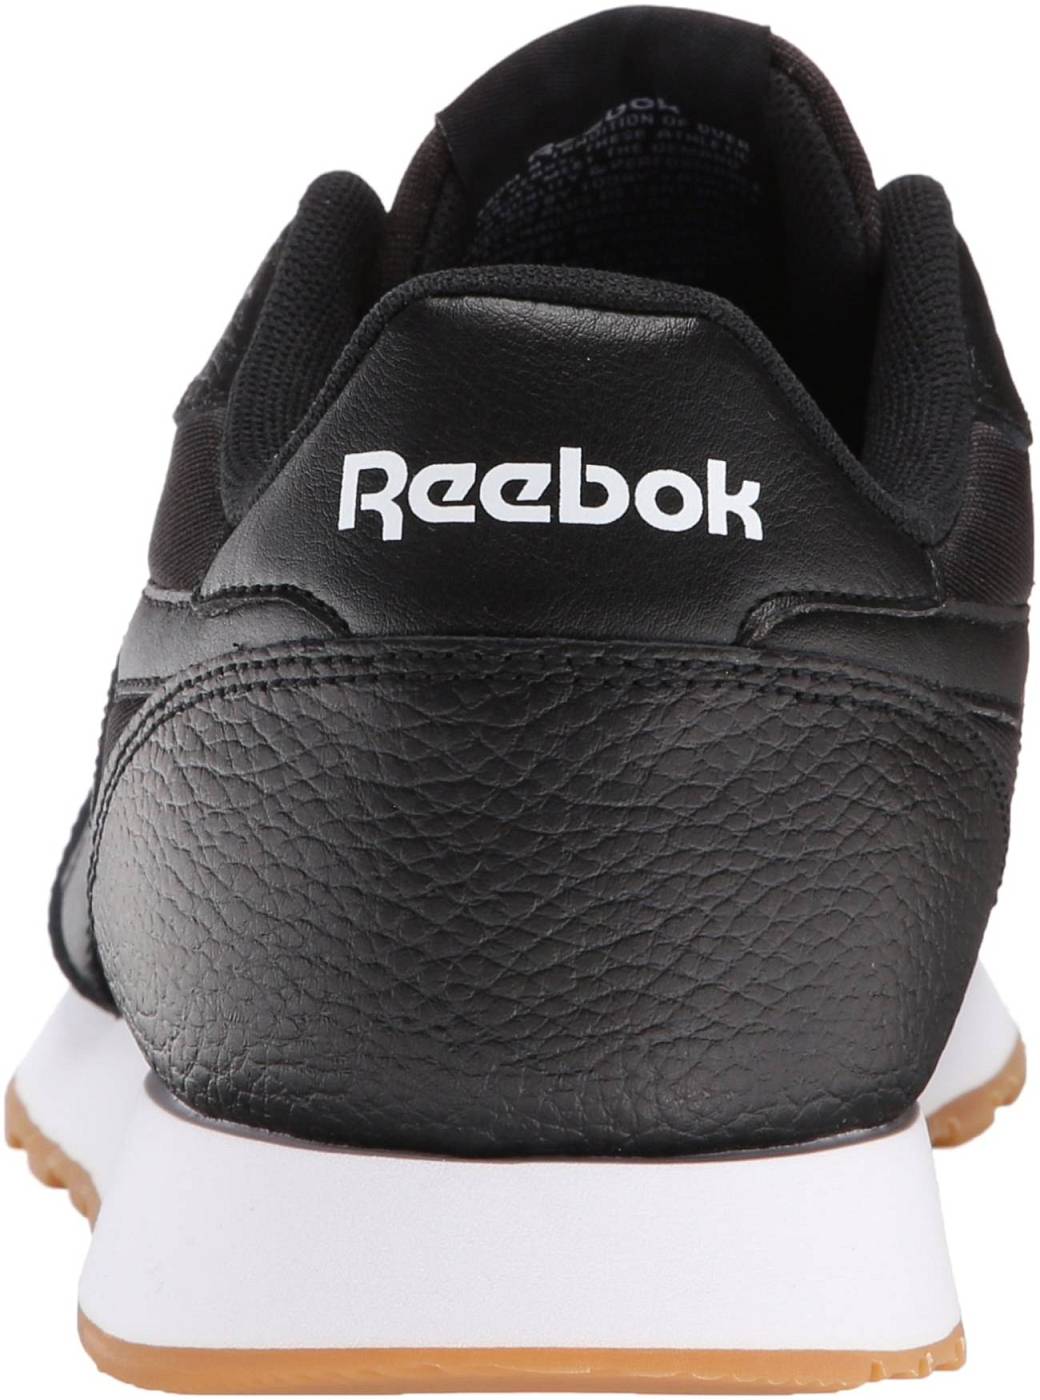 Reebok Royal Nylon Gum – Shoes Reviews & Reasons To Buy